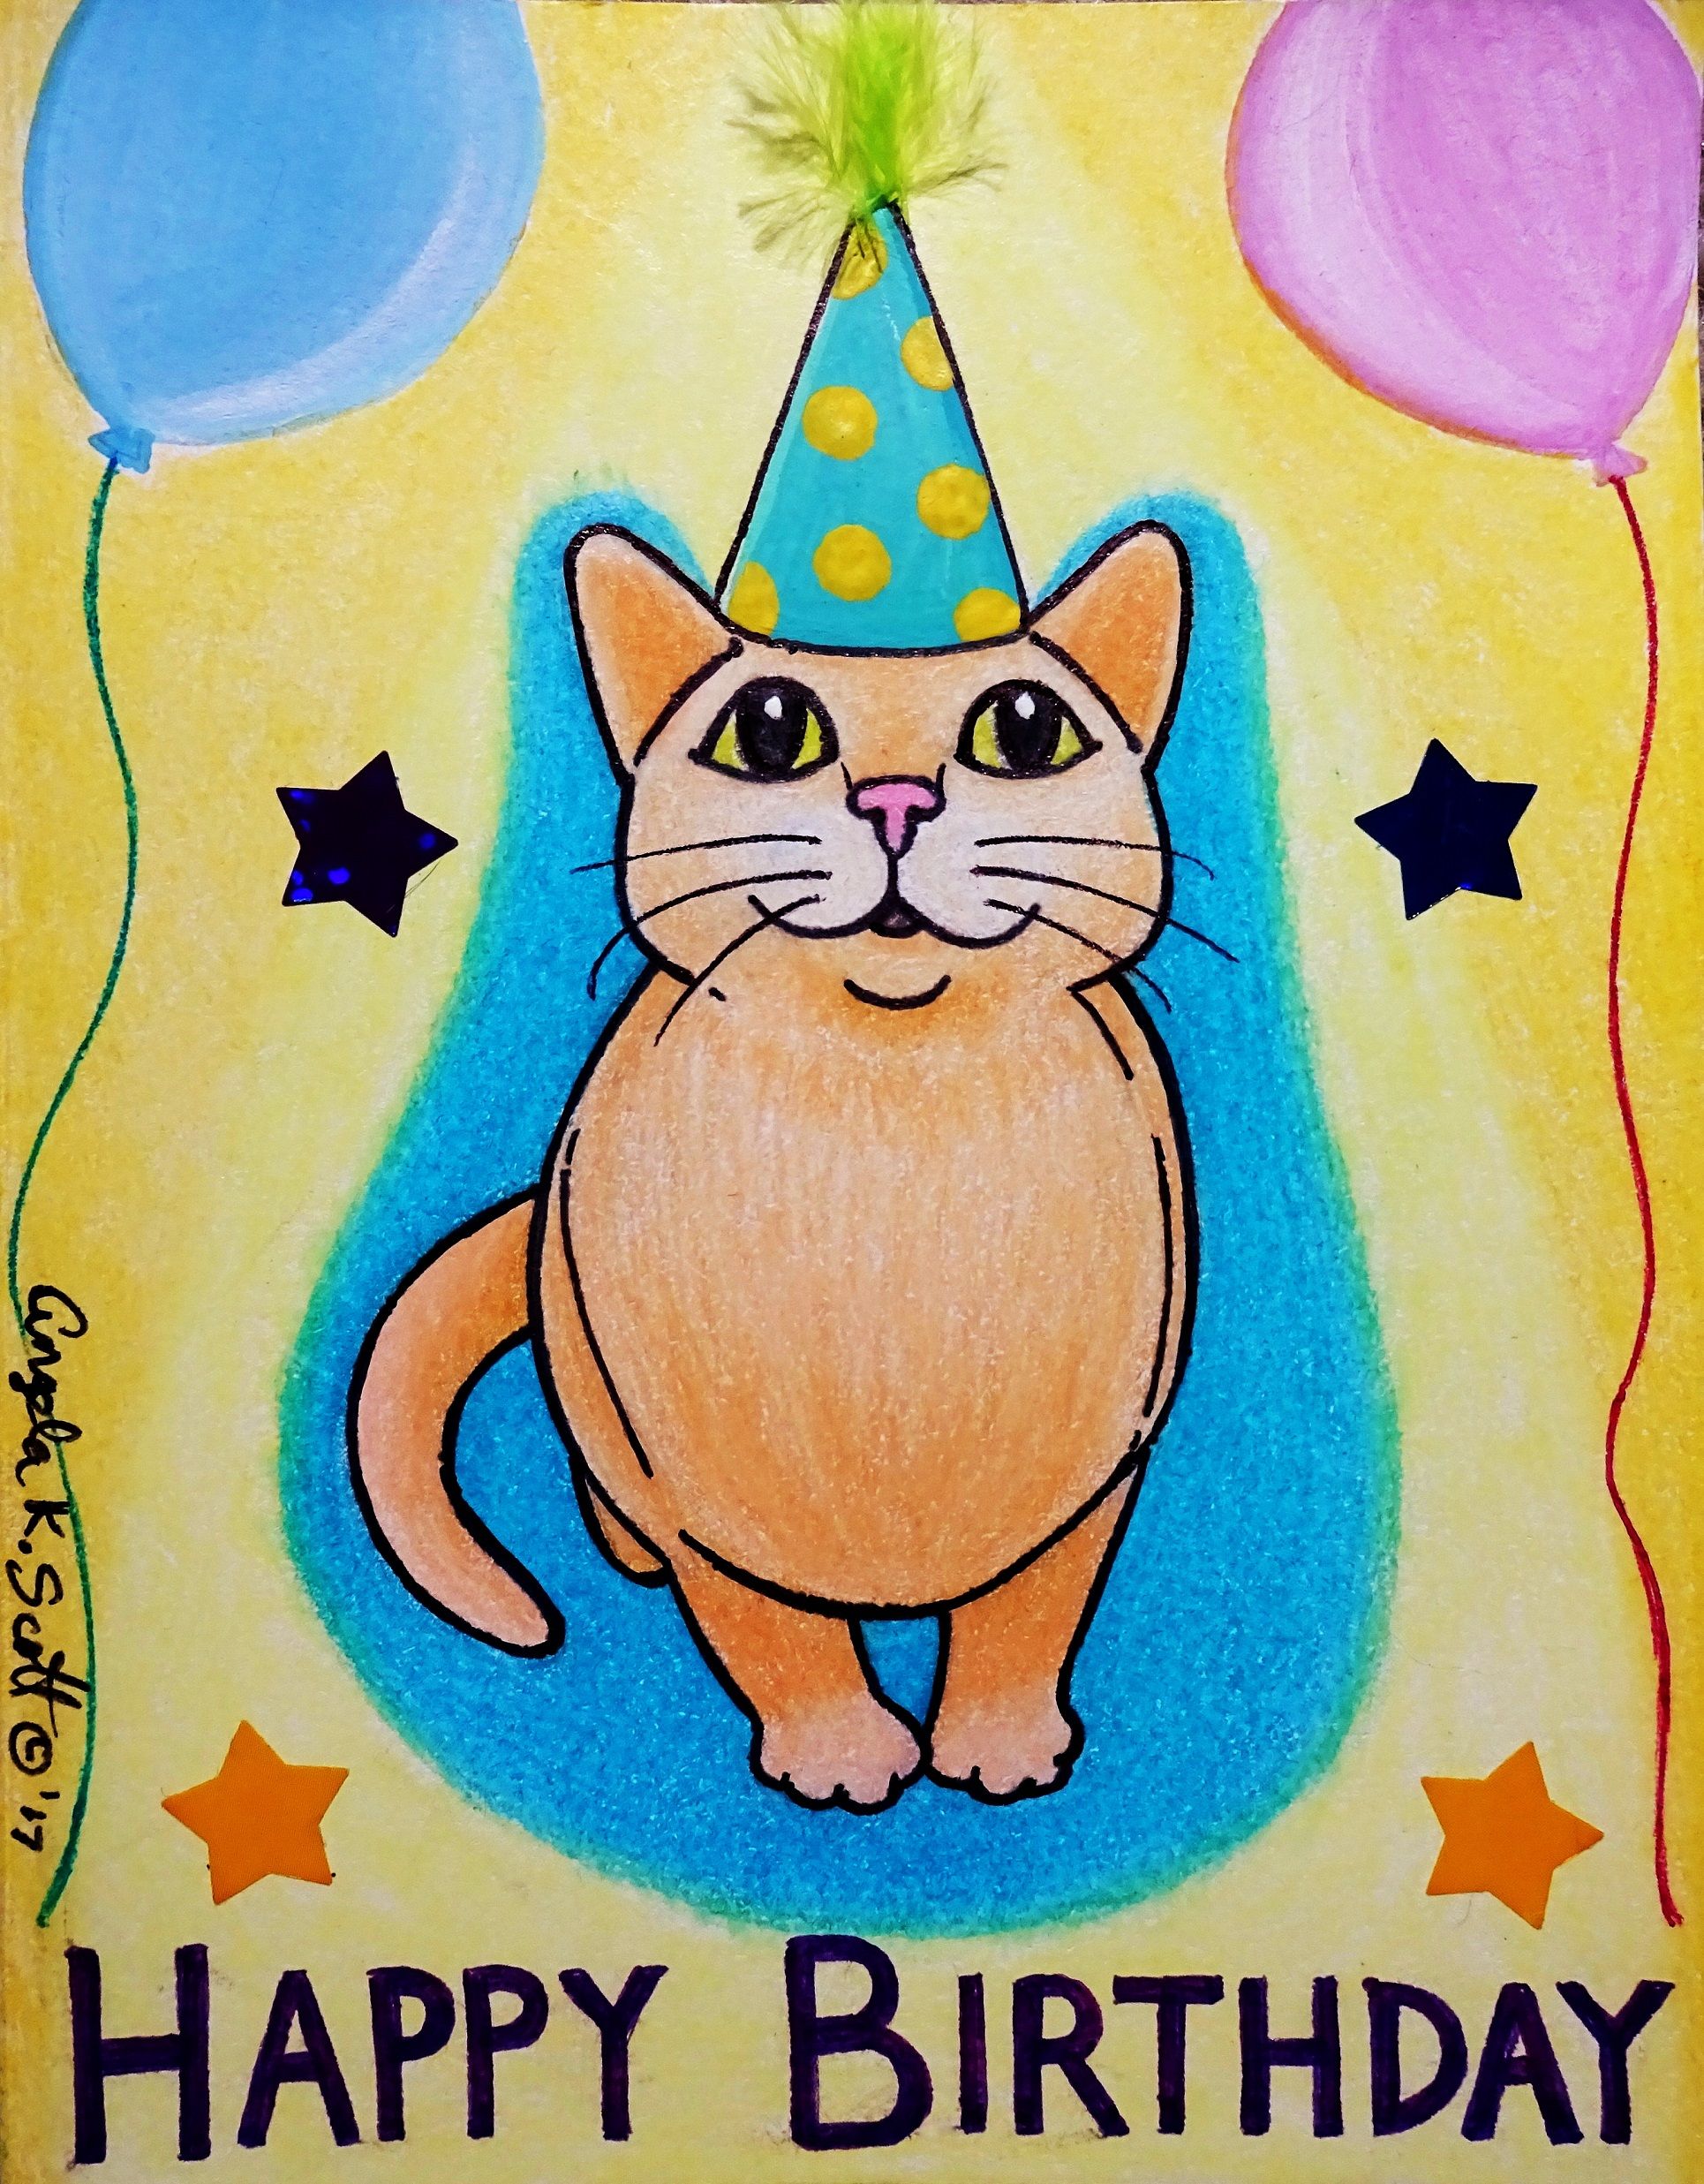 "Happy Birthday" CAT. My artwork of a bday hat wearing cat